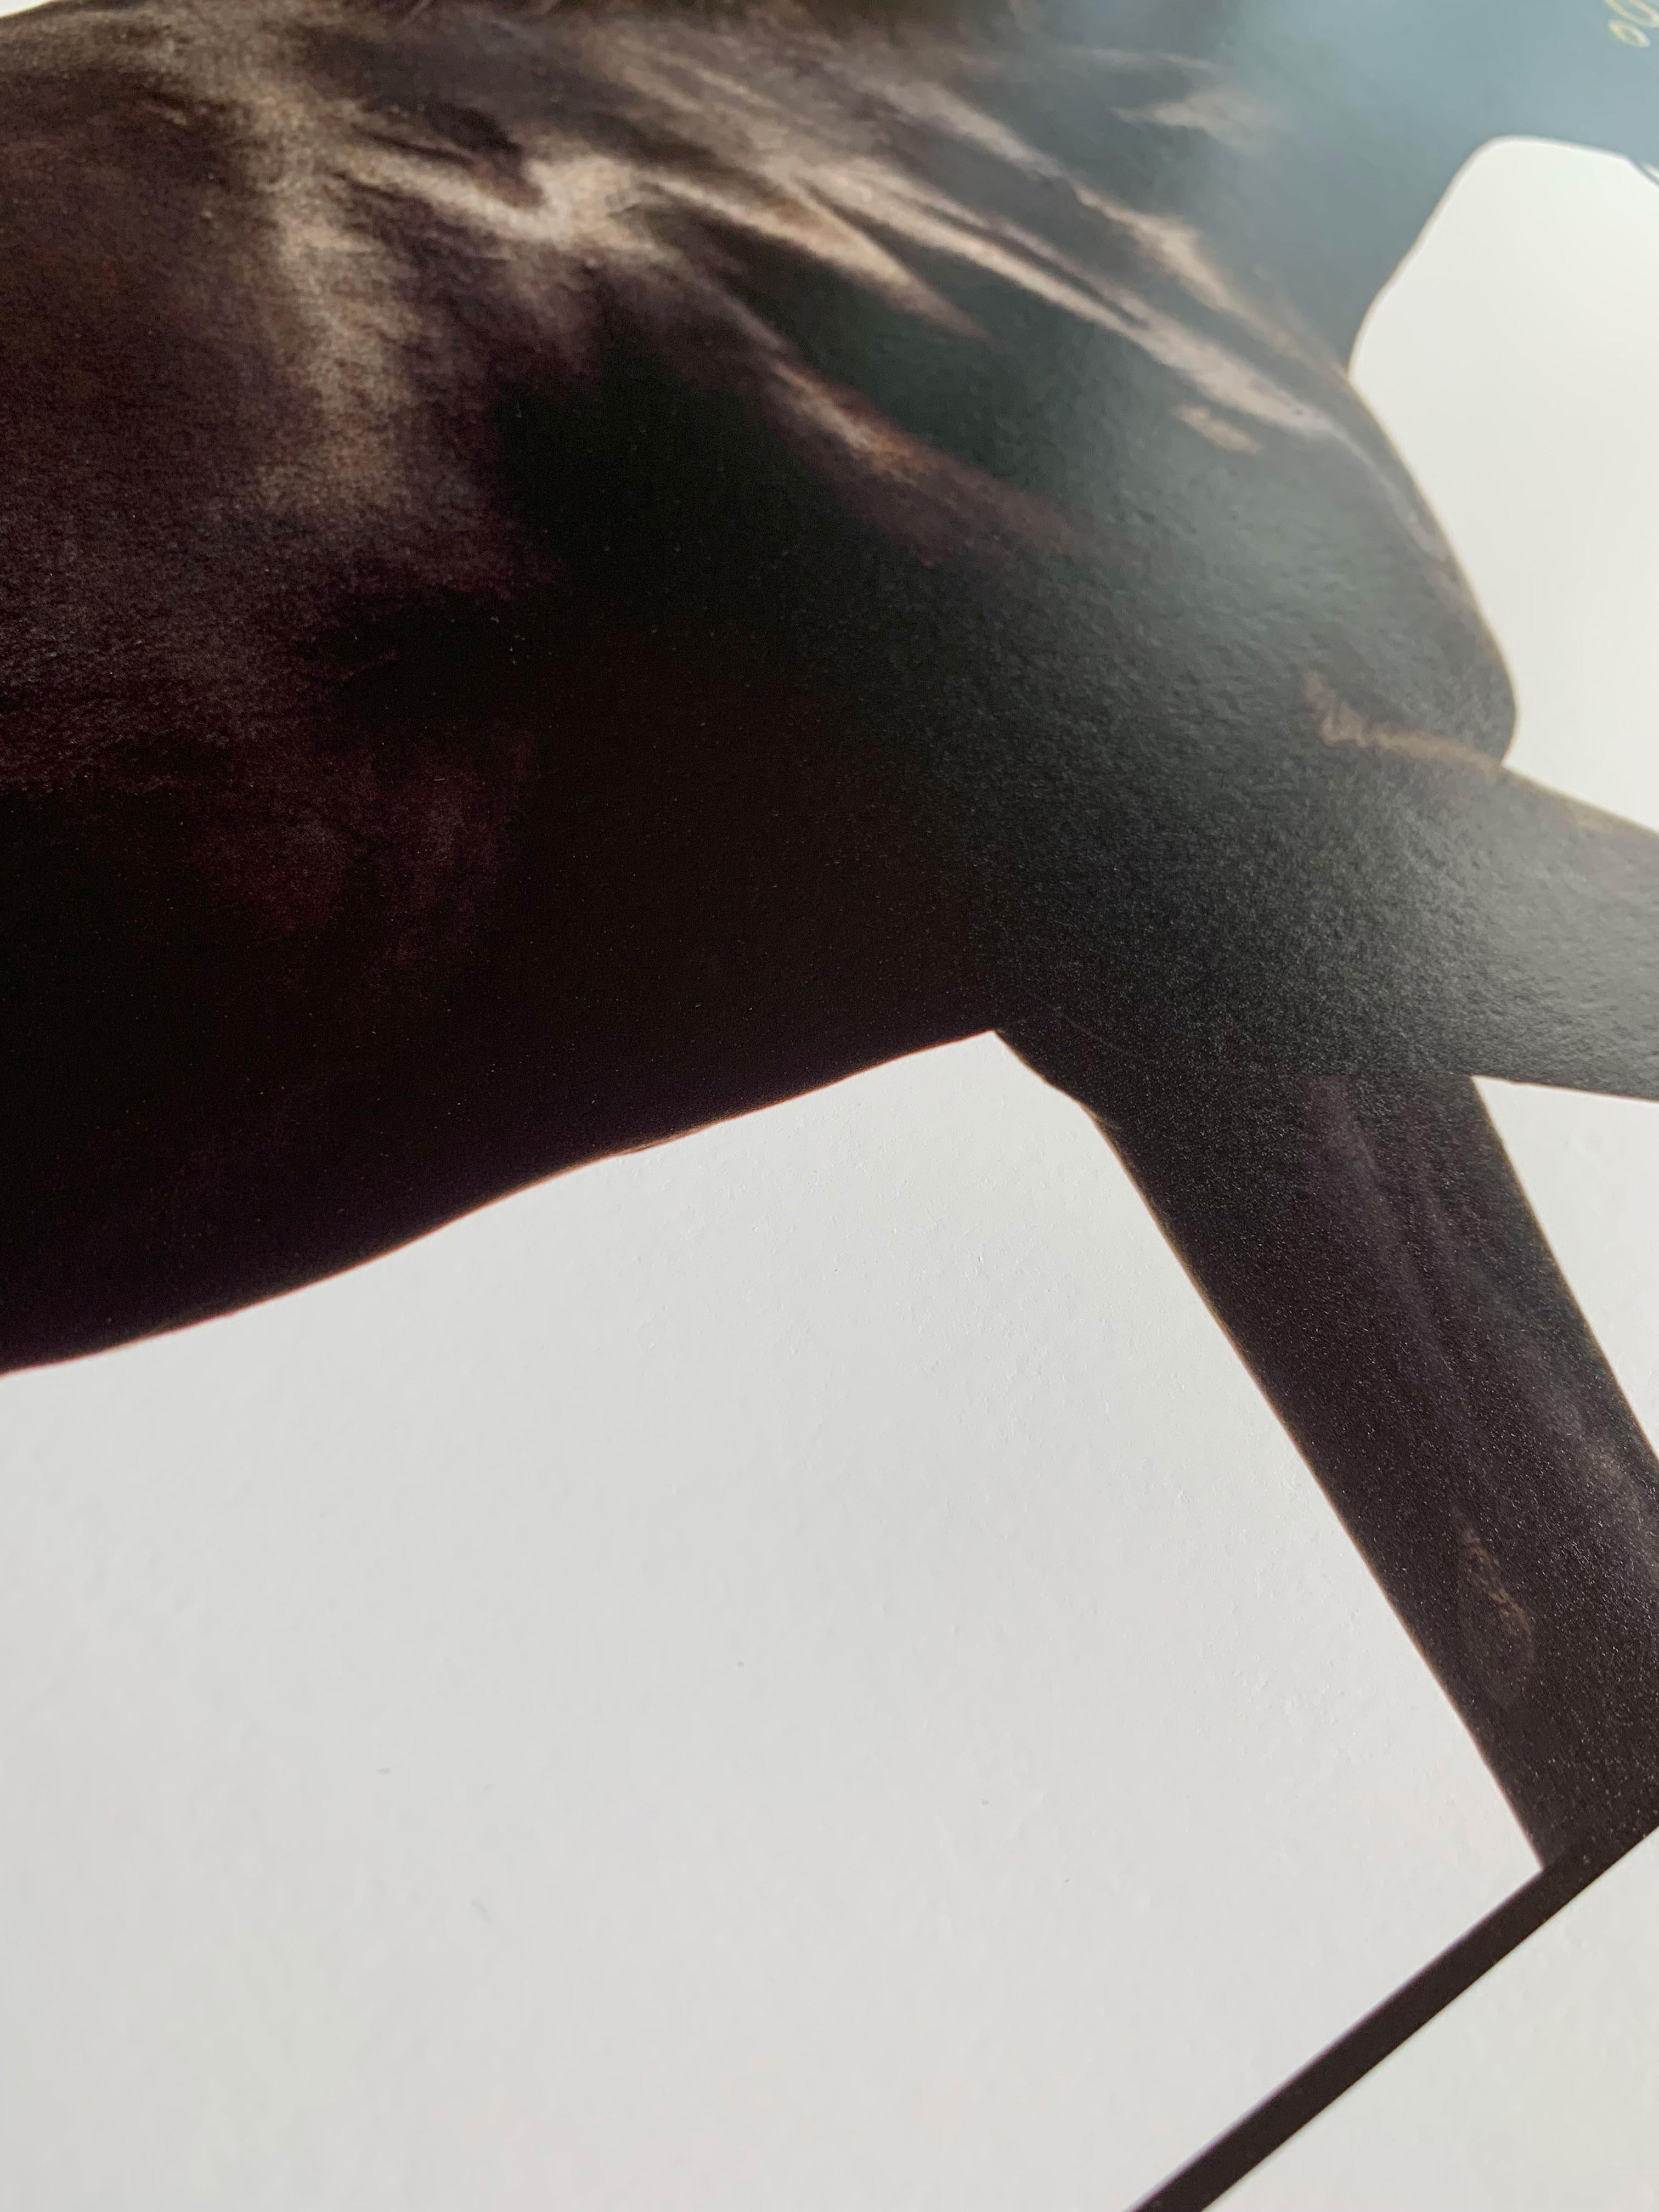 Cape Cross - Studio Portrait, Stallion, Champion, Equine Art Print Unframed - Contemporary Photograph by John Reardon